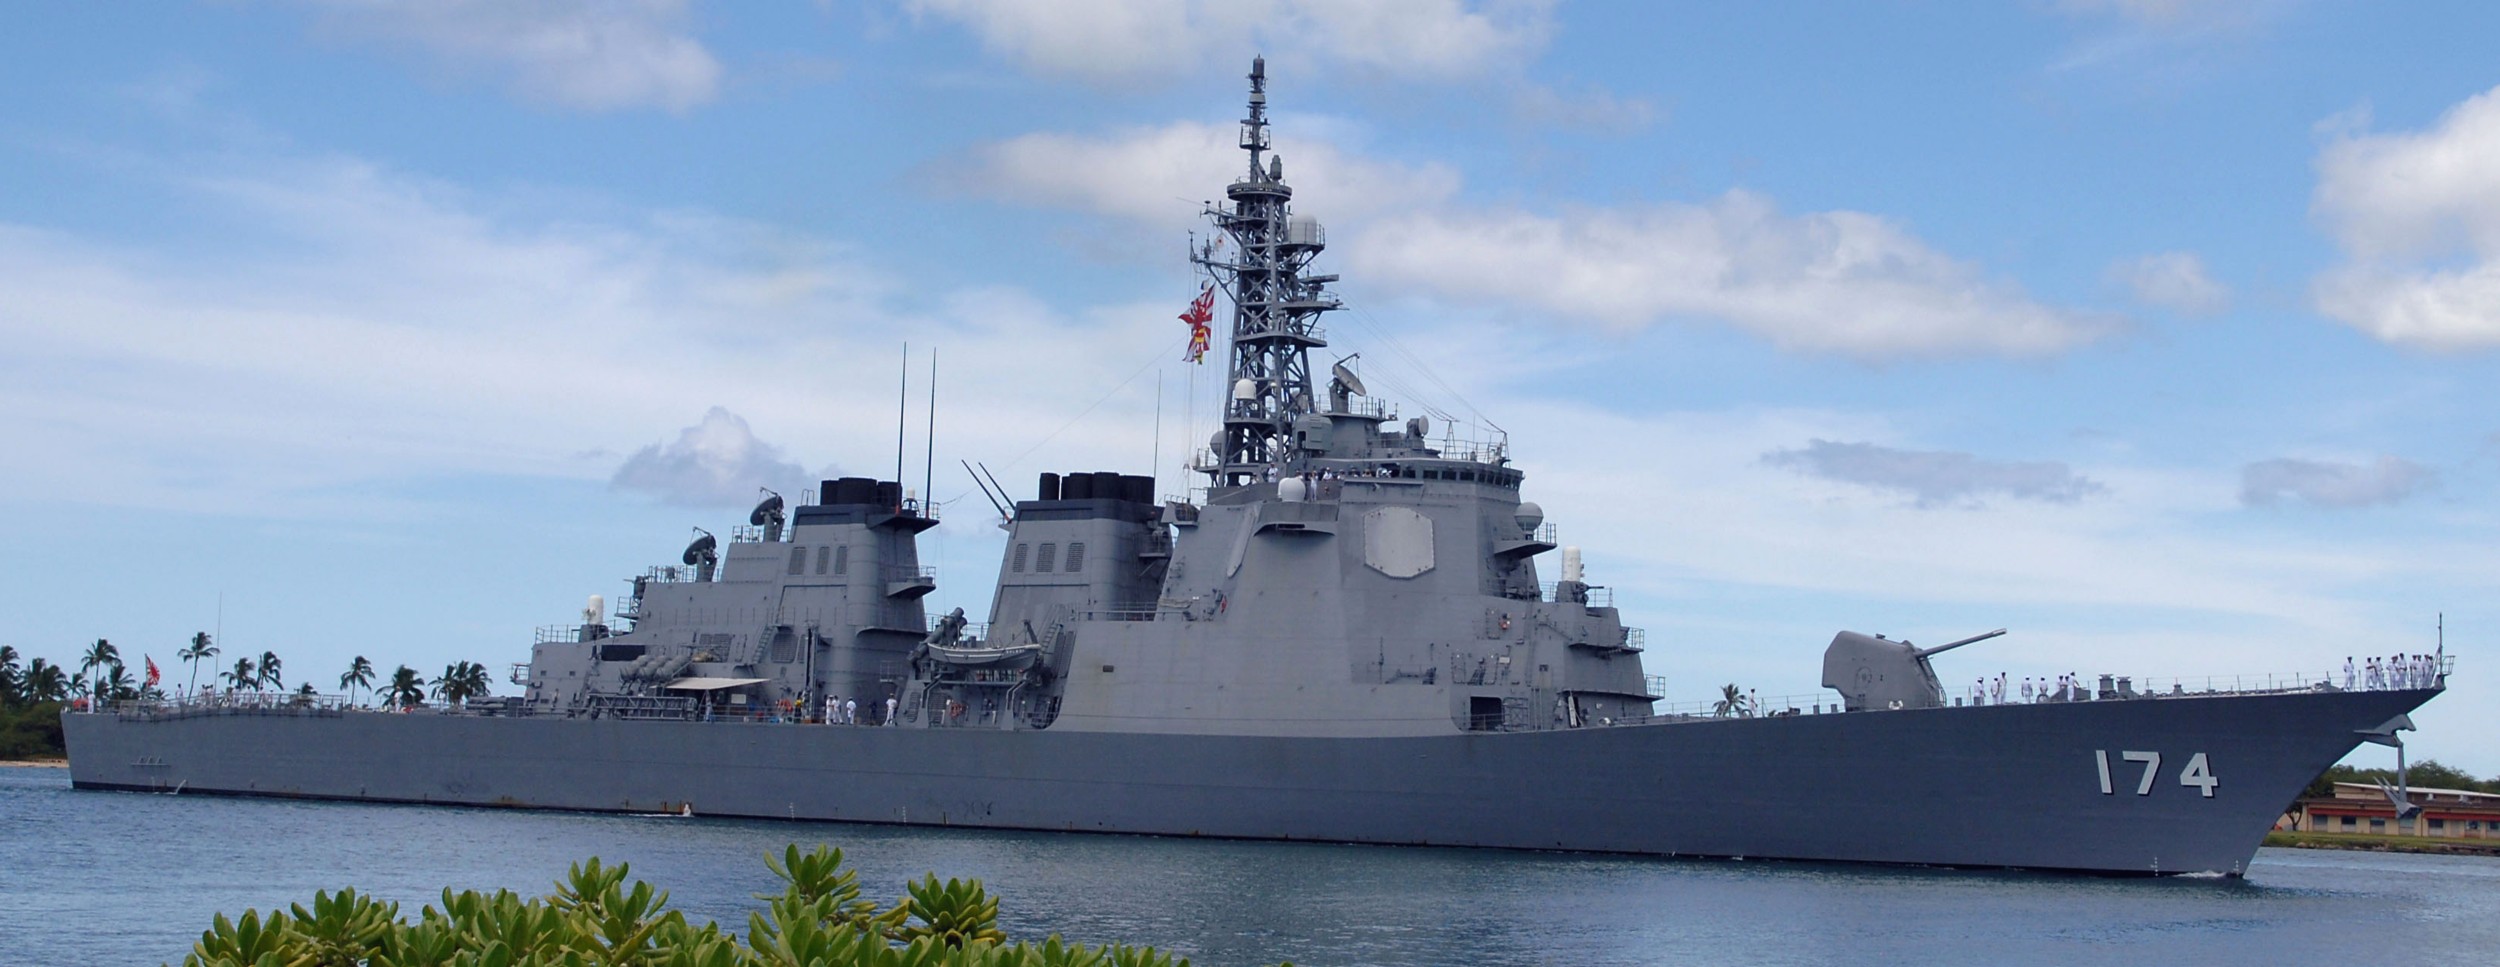 ddg-174 js kirishima kongo class guided missile destroyer aegis japan maritime self defense force jmsdf 24